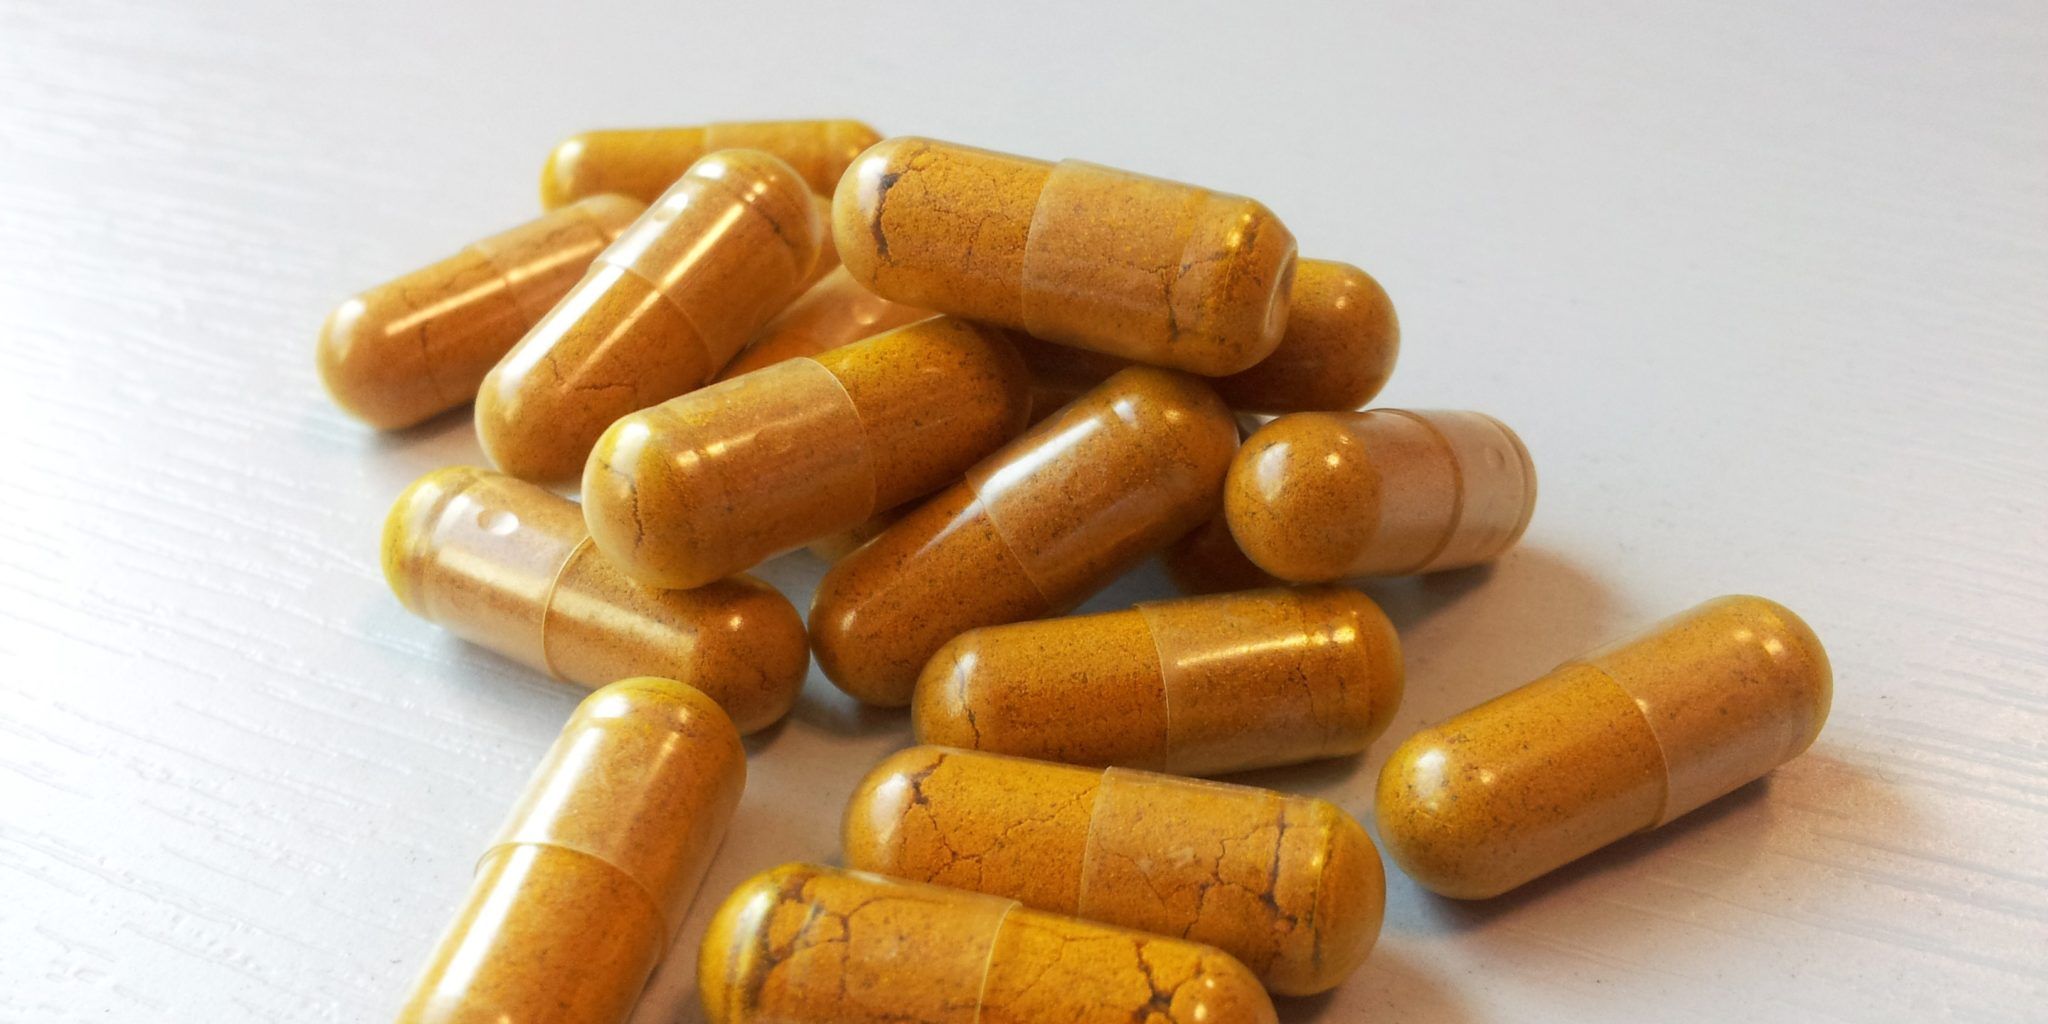 turmeric supplements